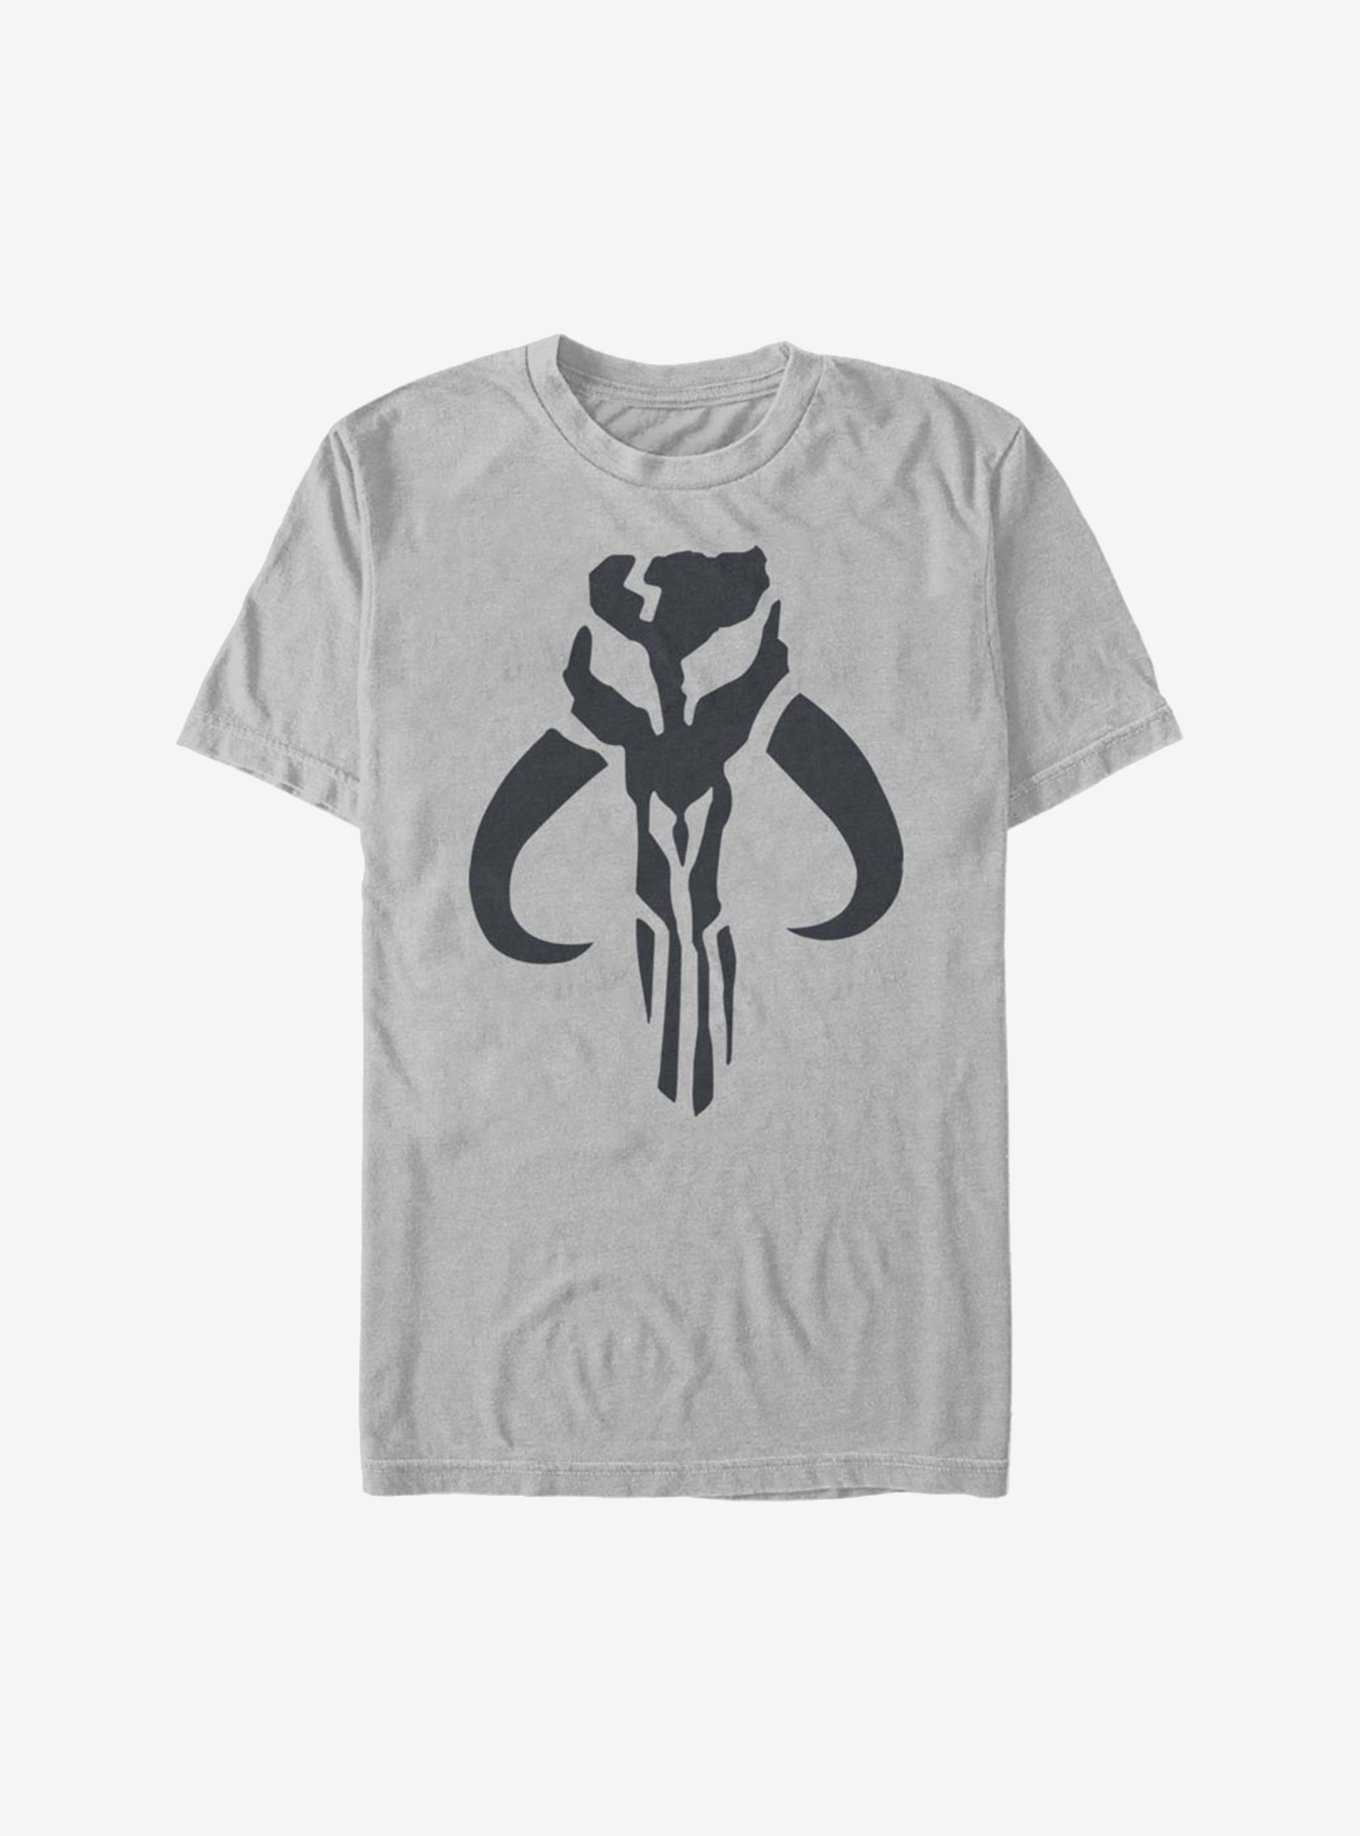 Extra Soft Star Wars The Mandalorian Simple Symbol T-Shirt, , hi-res